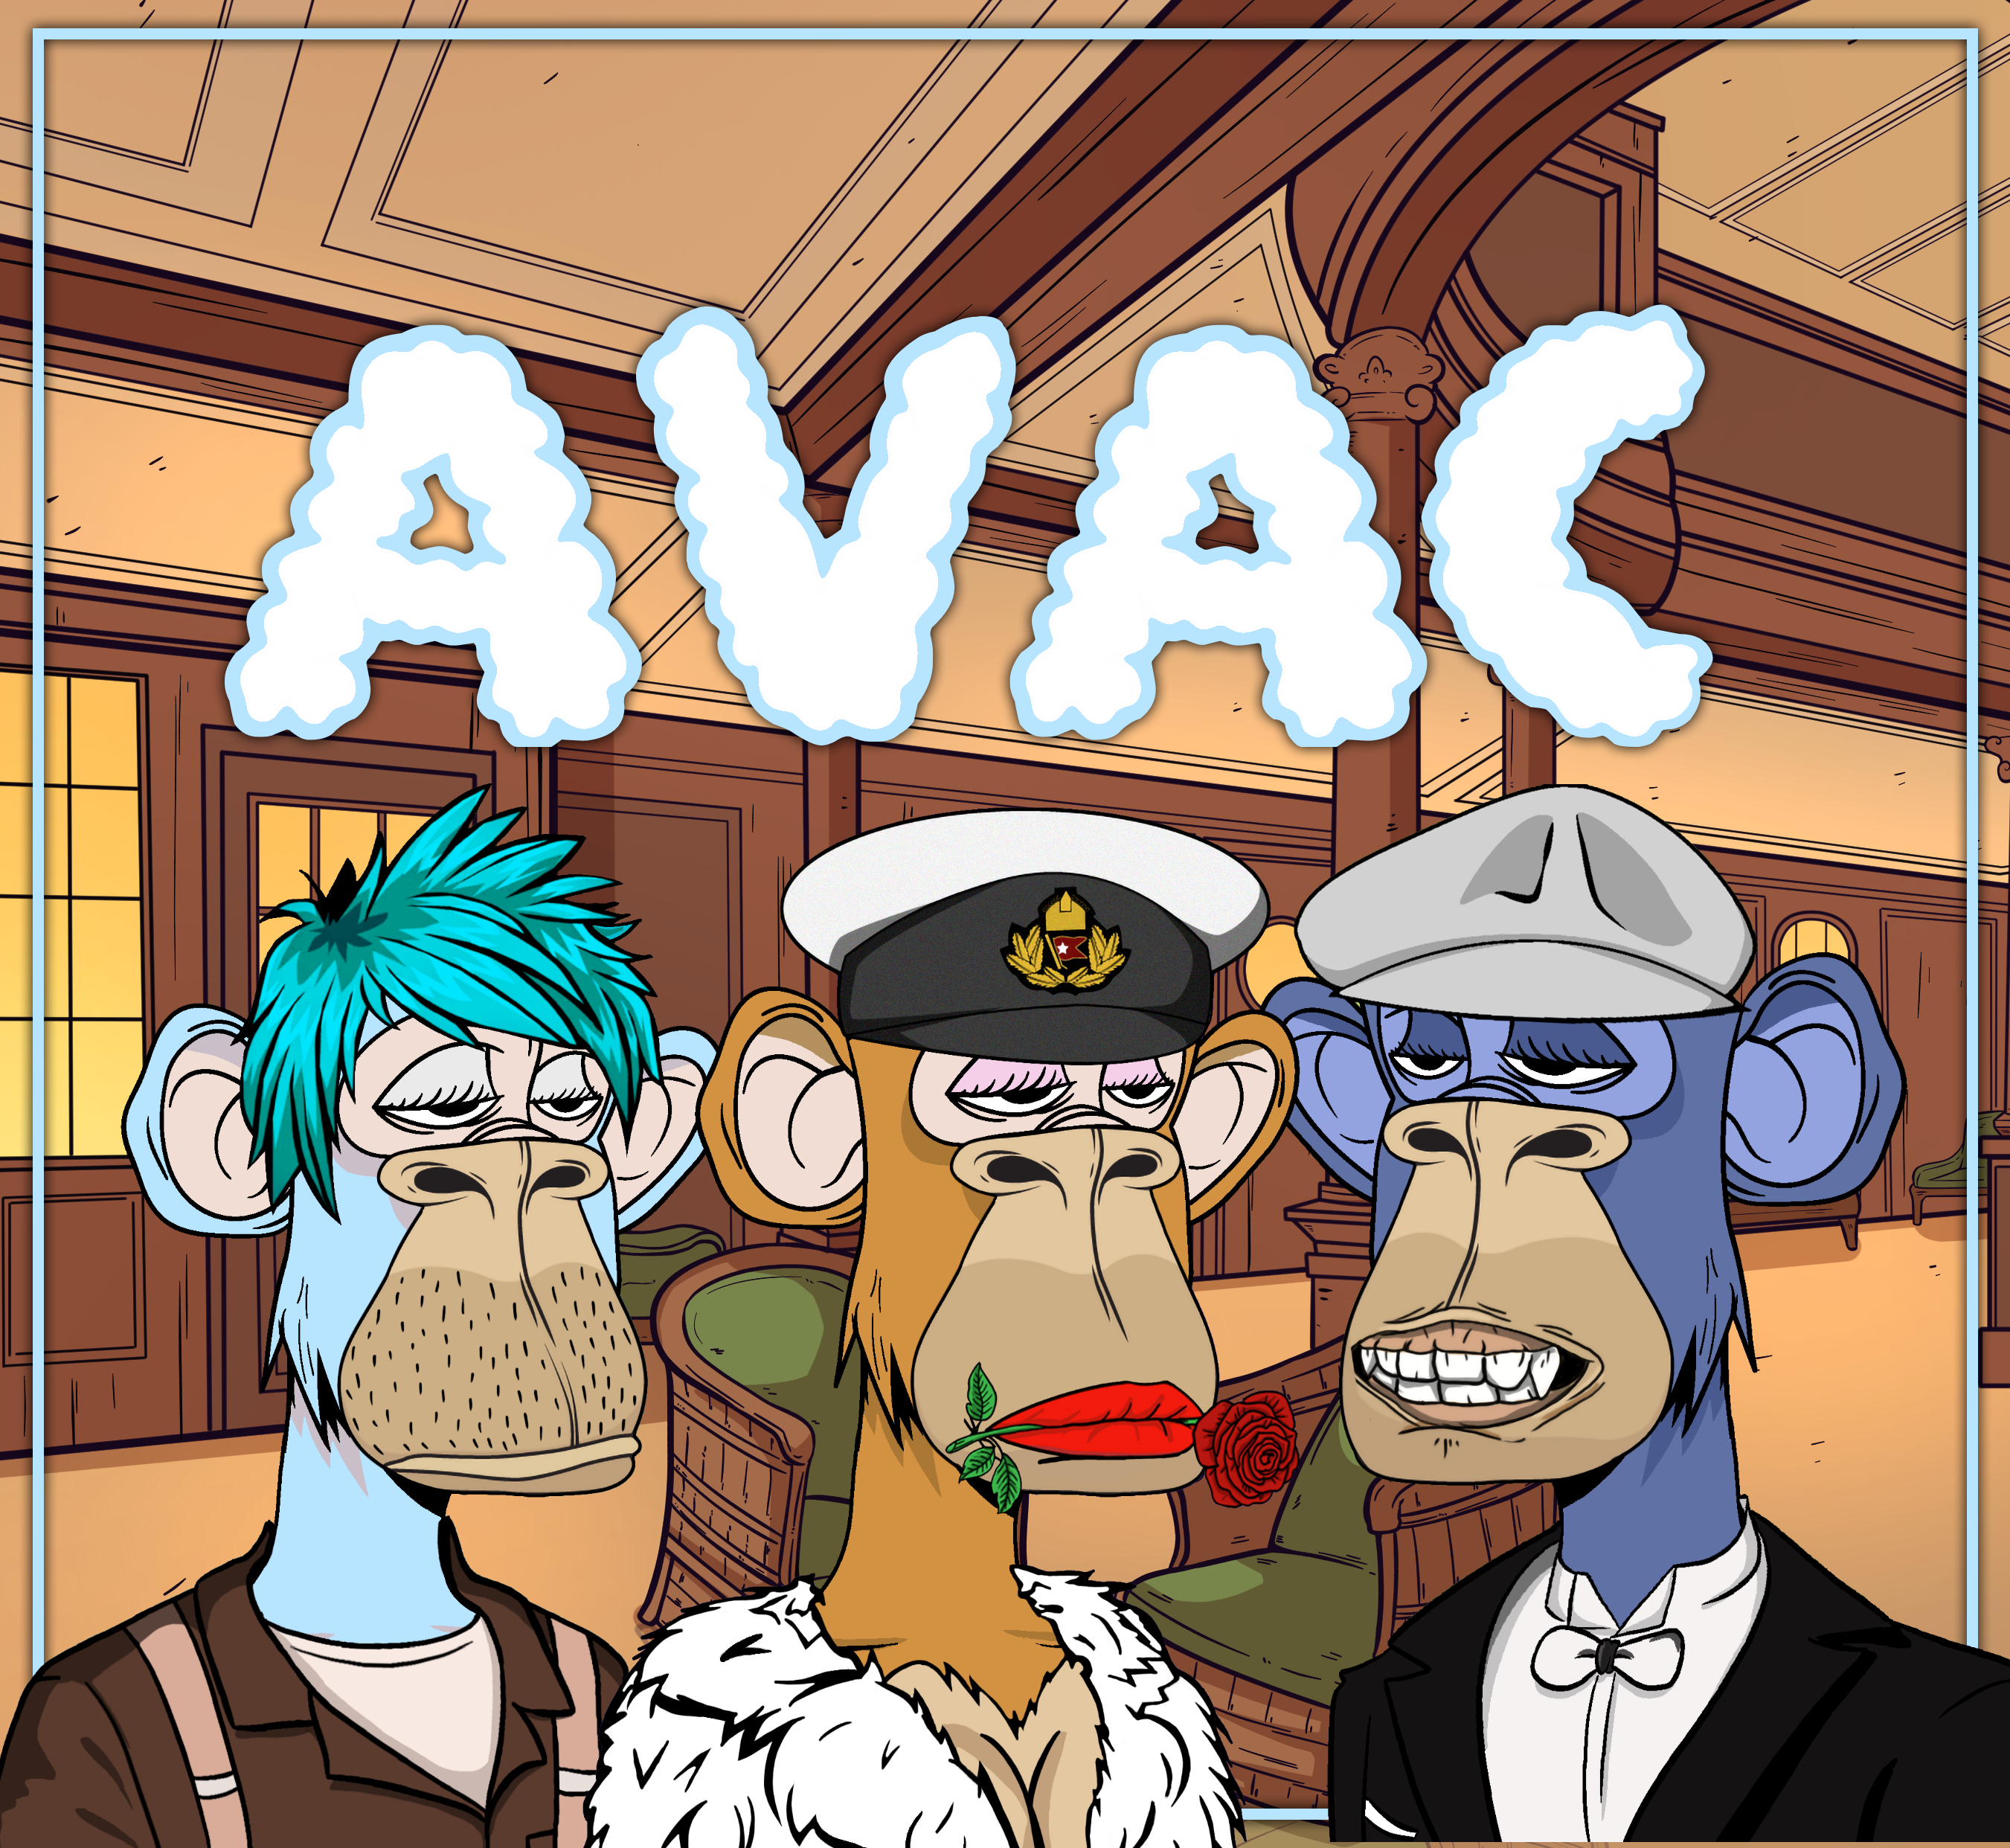 The Atlantic Voyage Ape Club Aims to establish Metacruising in the Metaverse